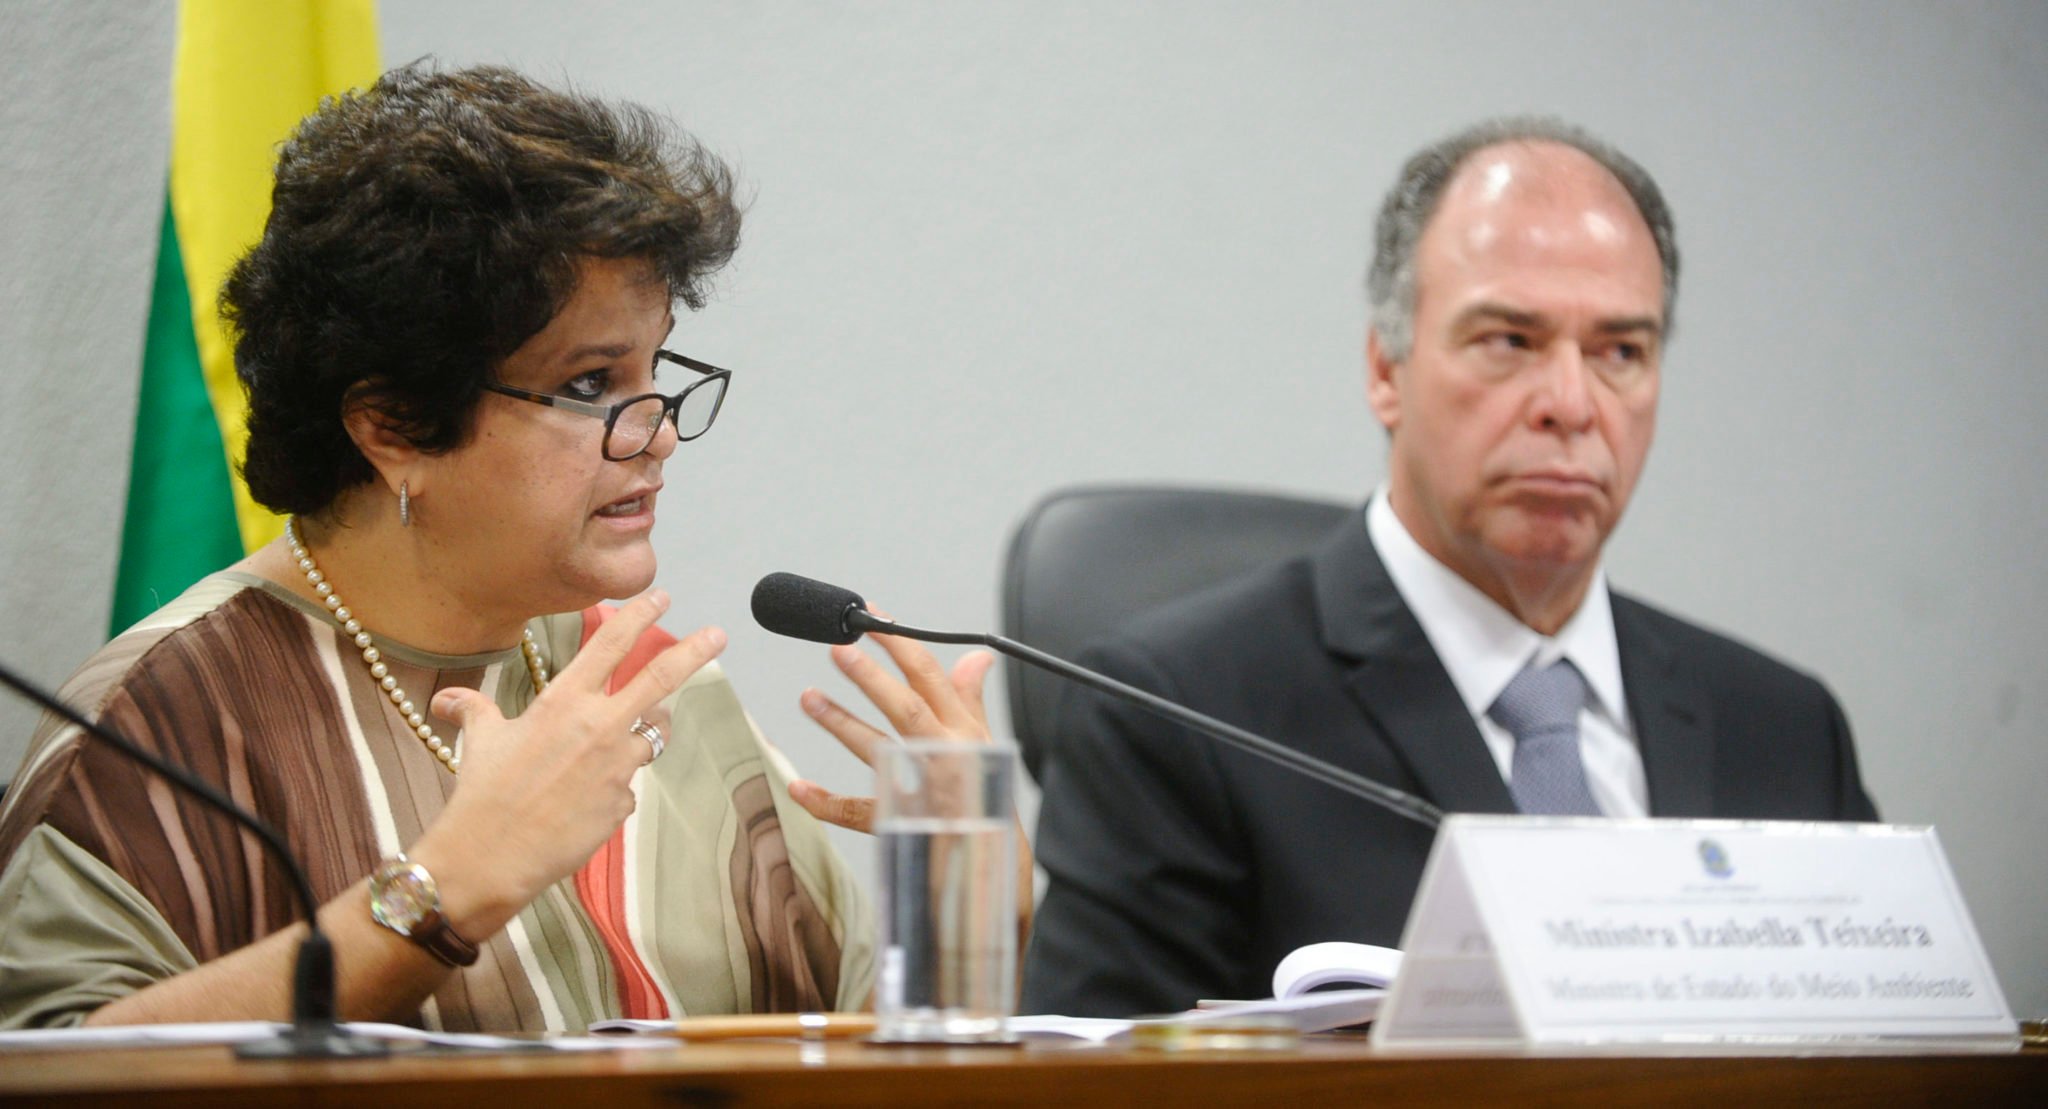 <p>Izabella Teixeira, Brazil&#8217;s former Environment Minister (image: <a href="https://commons.wikimedia.org/wiki/File:CMMC_-_Comiss%C3%A3o_Mista_Permanente_sobre_Mudan%C3%A7as_Clim%C3%A1ticas_(21678326230).jpg">CMCC</a>)</p>